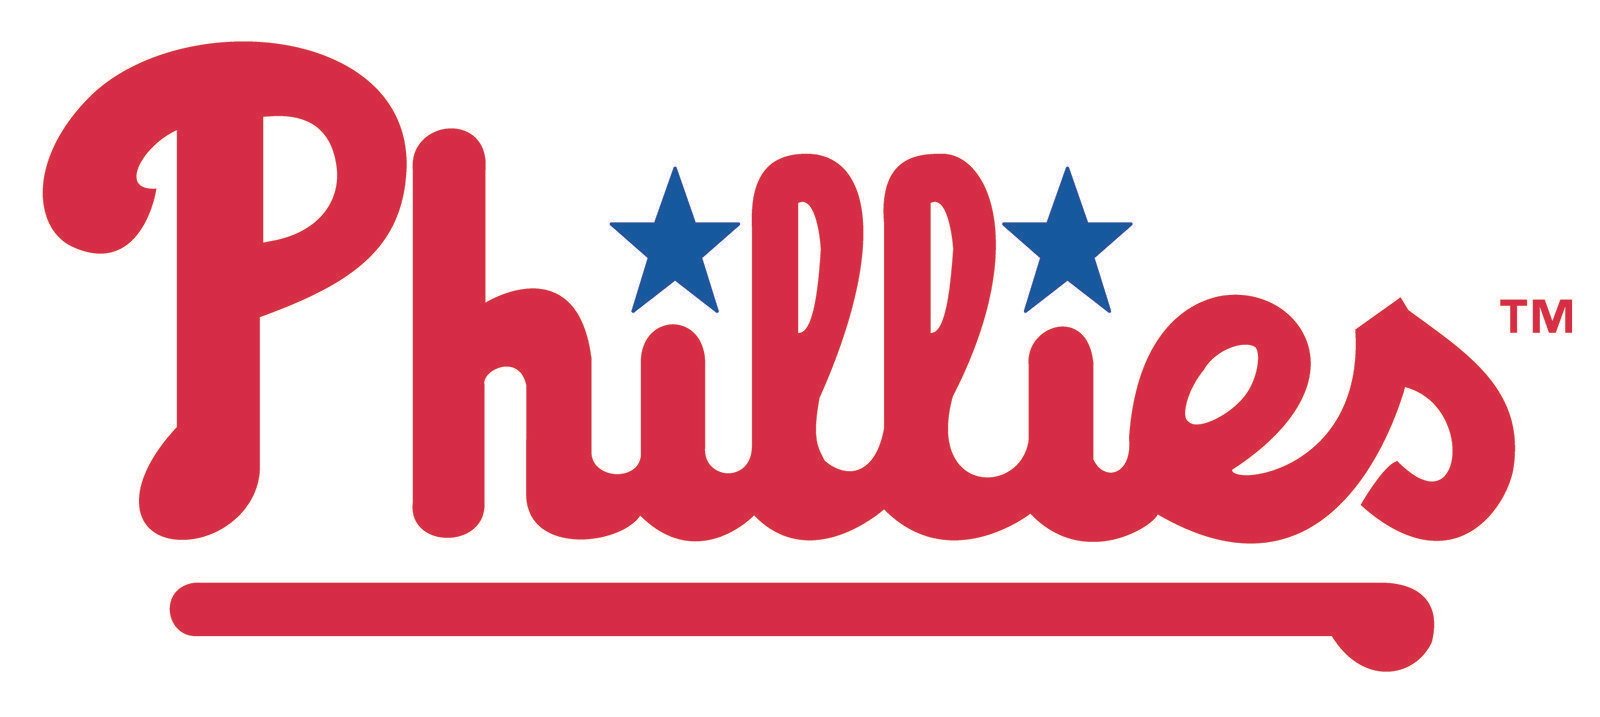 Phillies Logo - Font Phillies Logo | All logos world | Pinterest | Logos, Fonts and ...